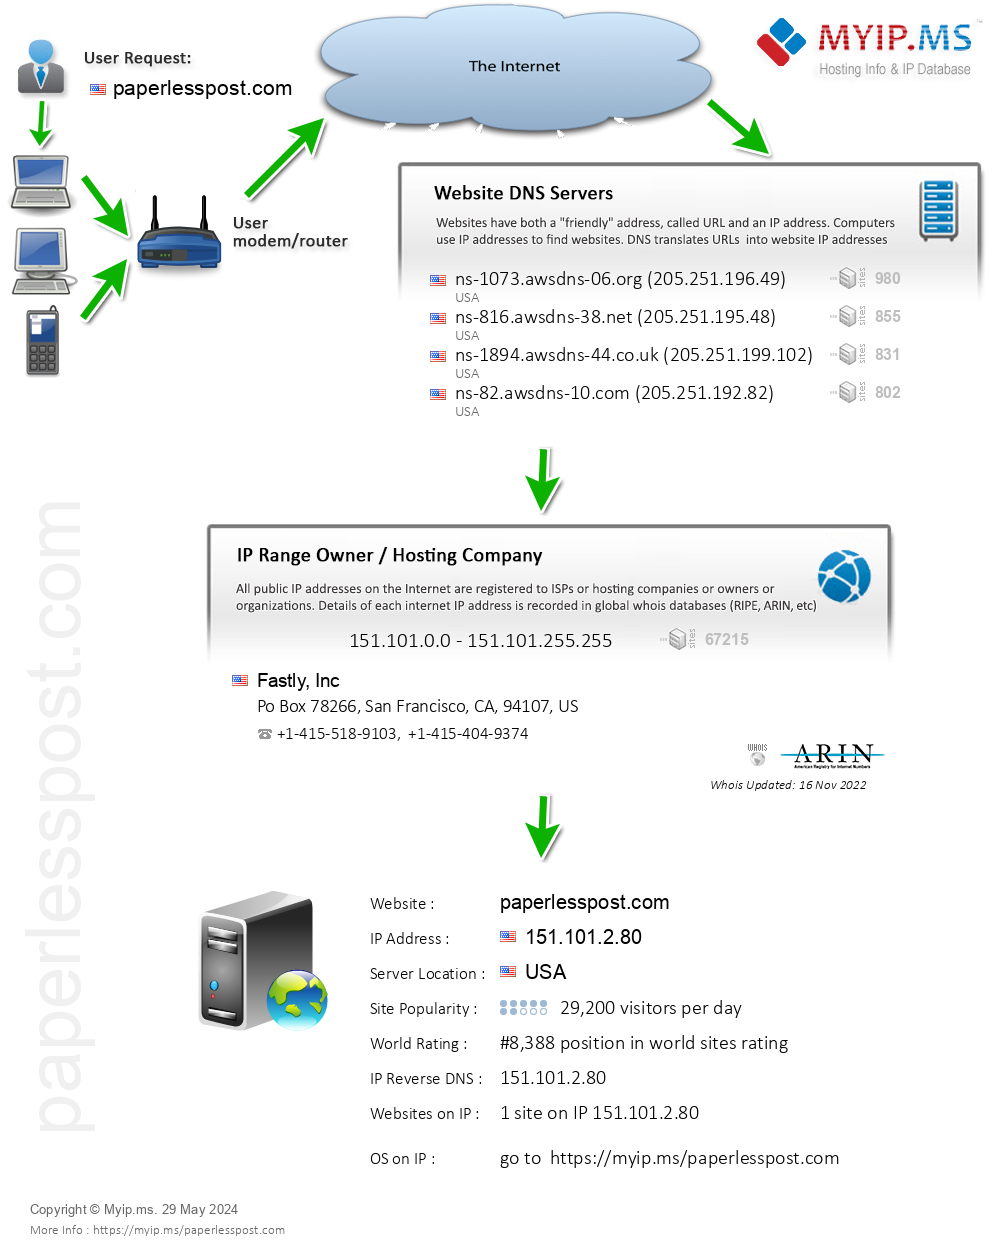 Paperlesspost.com - Website Hosting Visual IP Diagram